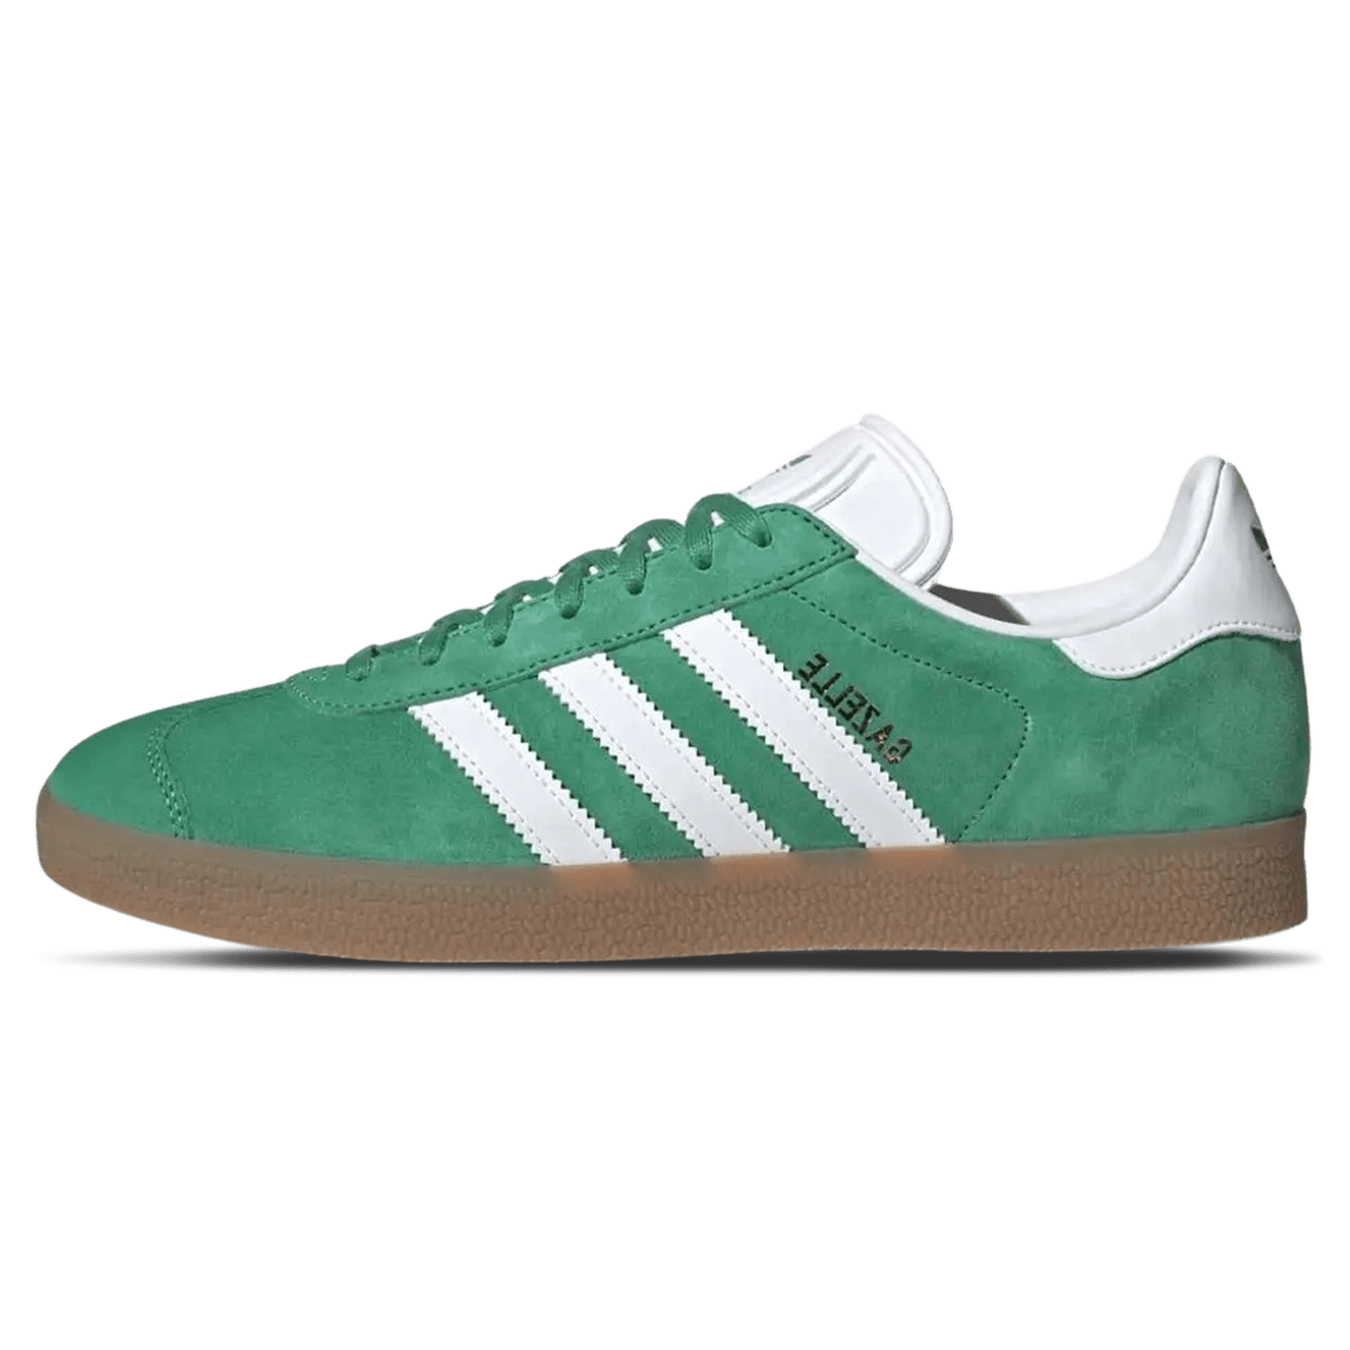 Adidas Originals Gazelle Sneakers In Green, 59% OFF